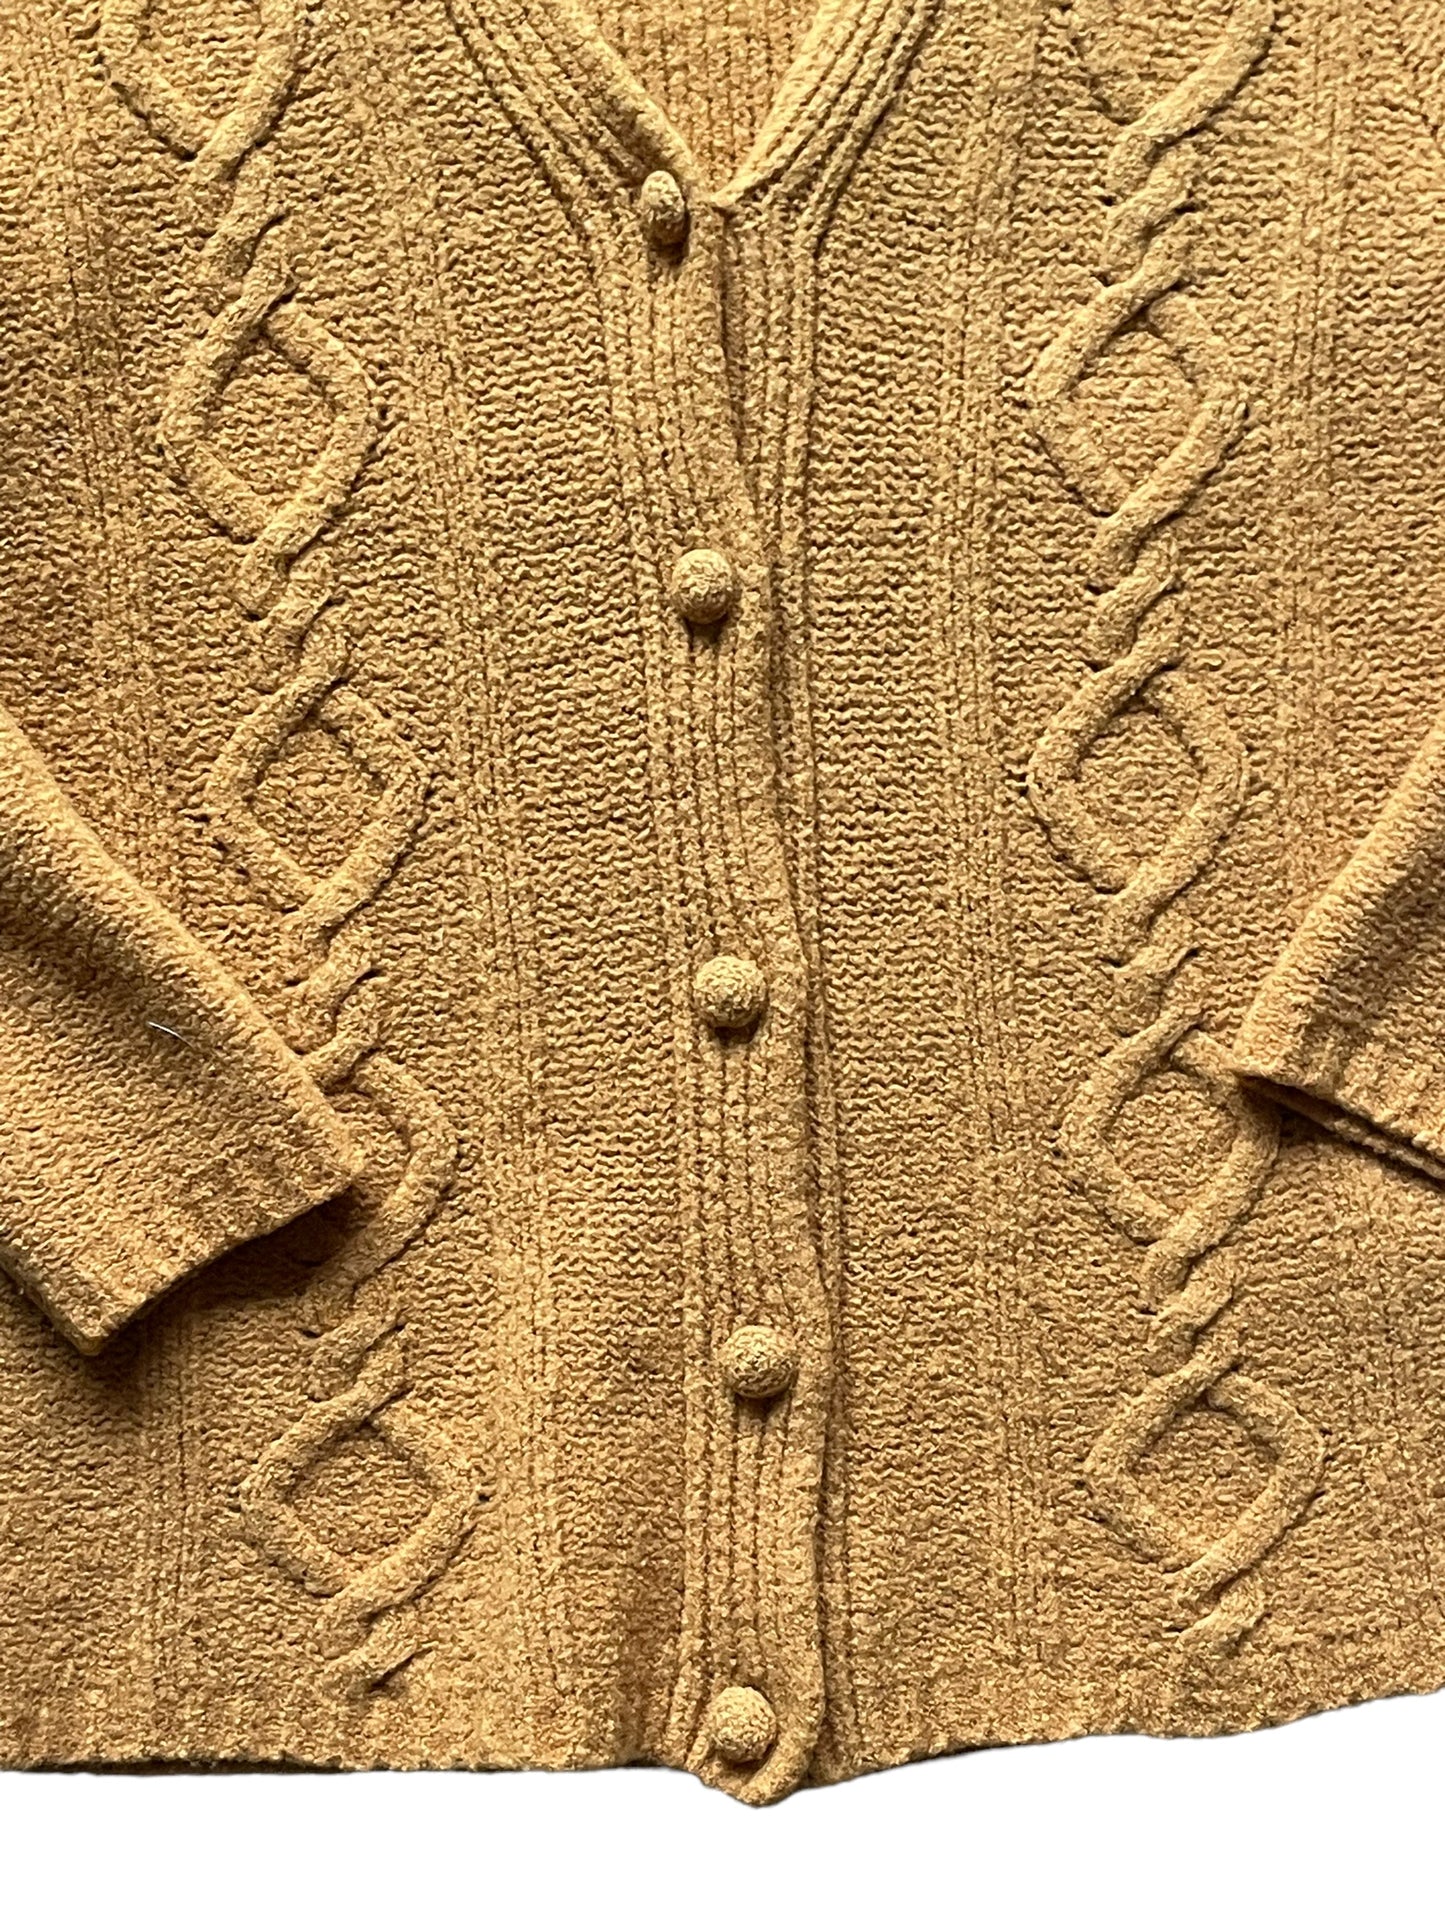 Front button view of Vintage Pumpkin Cable Knit Cardigan SZ S-M | Seattle Ladies Vintage | Barn Owl Seattle